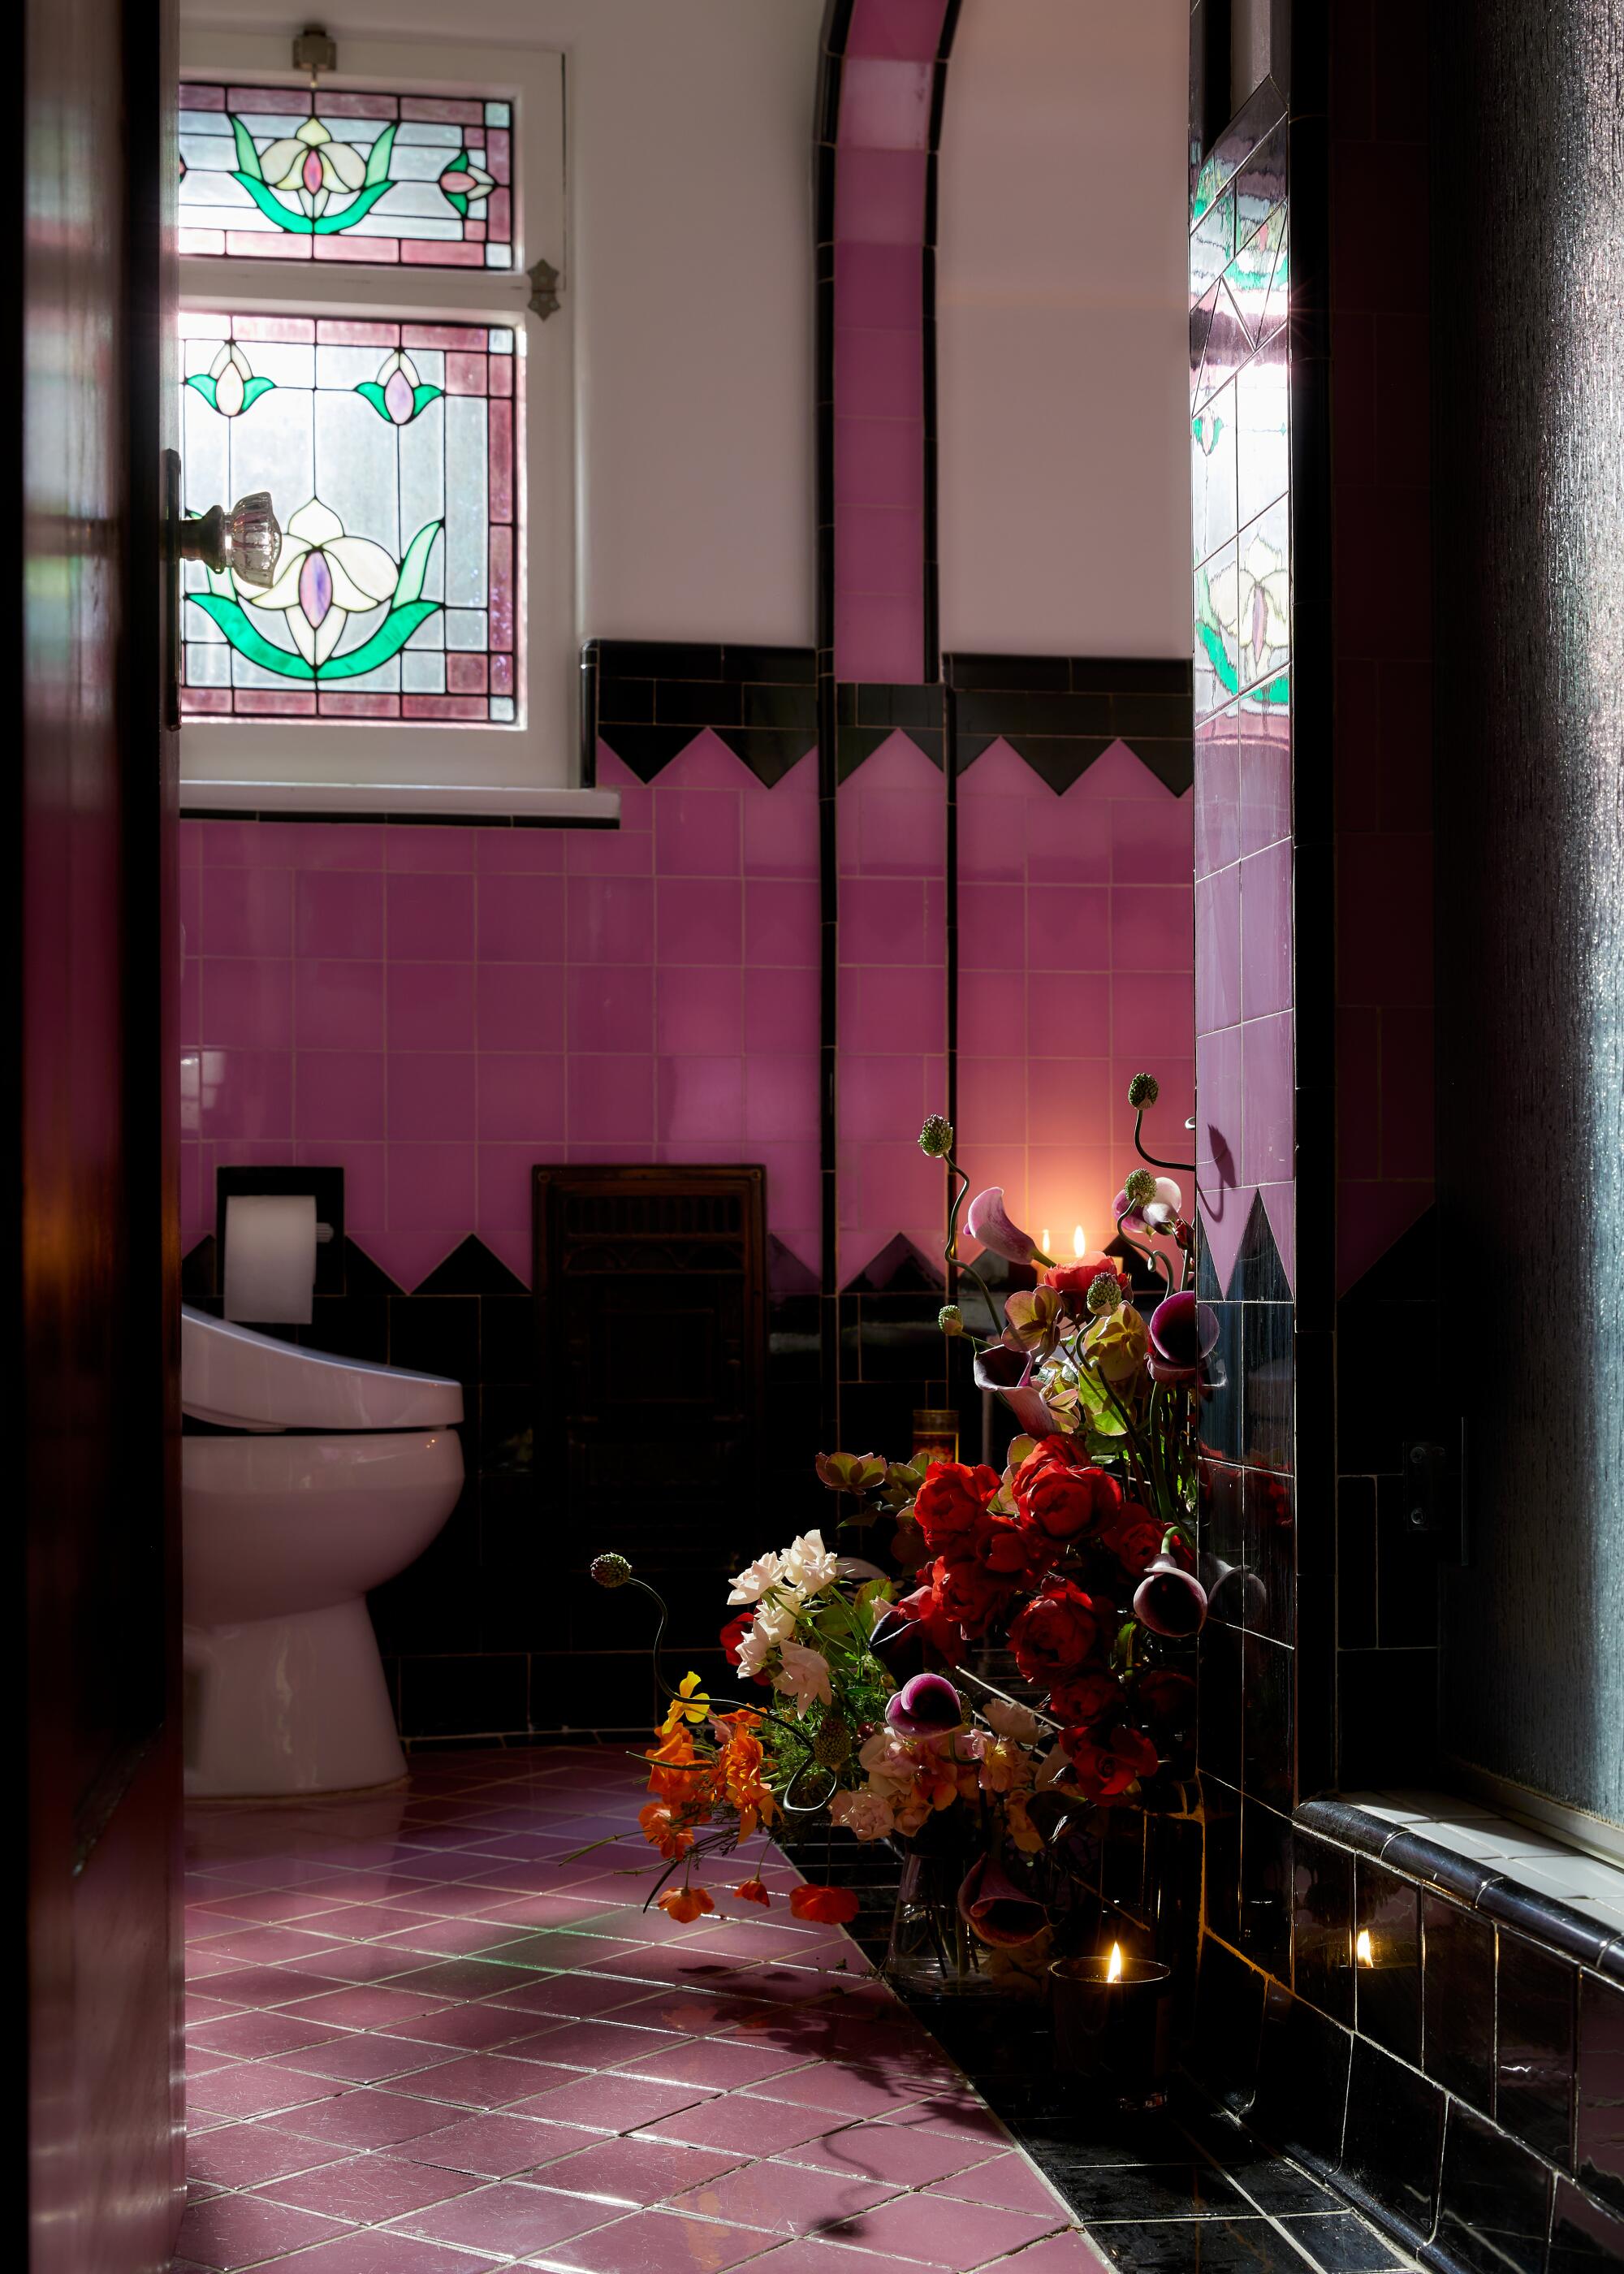 A richly tiled bathroom holds a floral art installation.